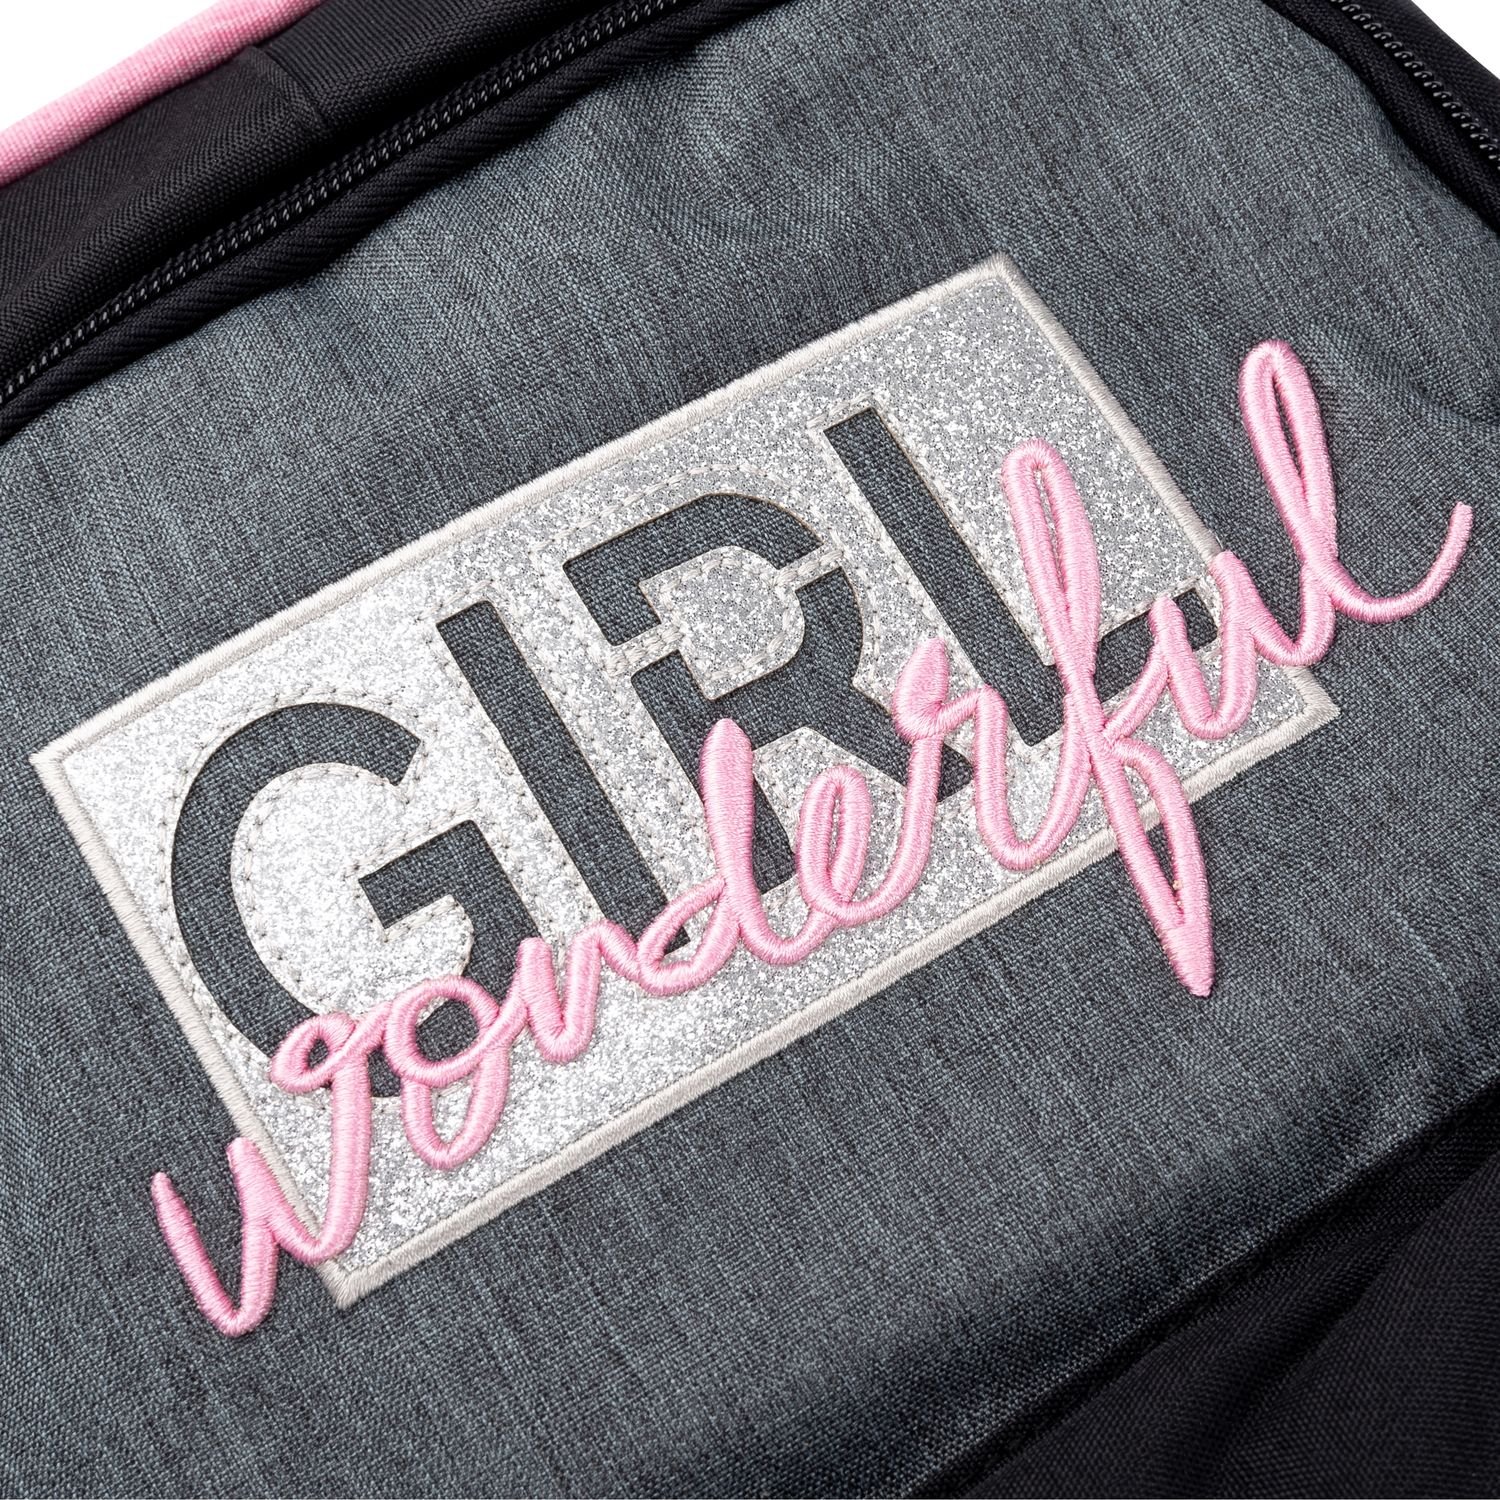 Рюкзак Yes TS-61 Girl Wonderful, черный с розовым (558908) - фото 10